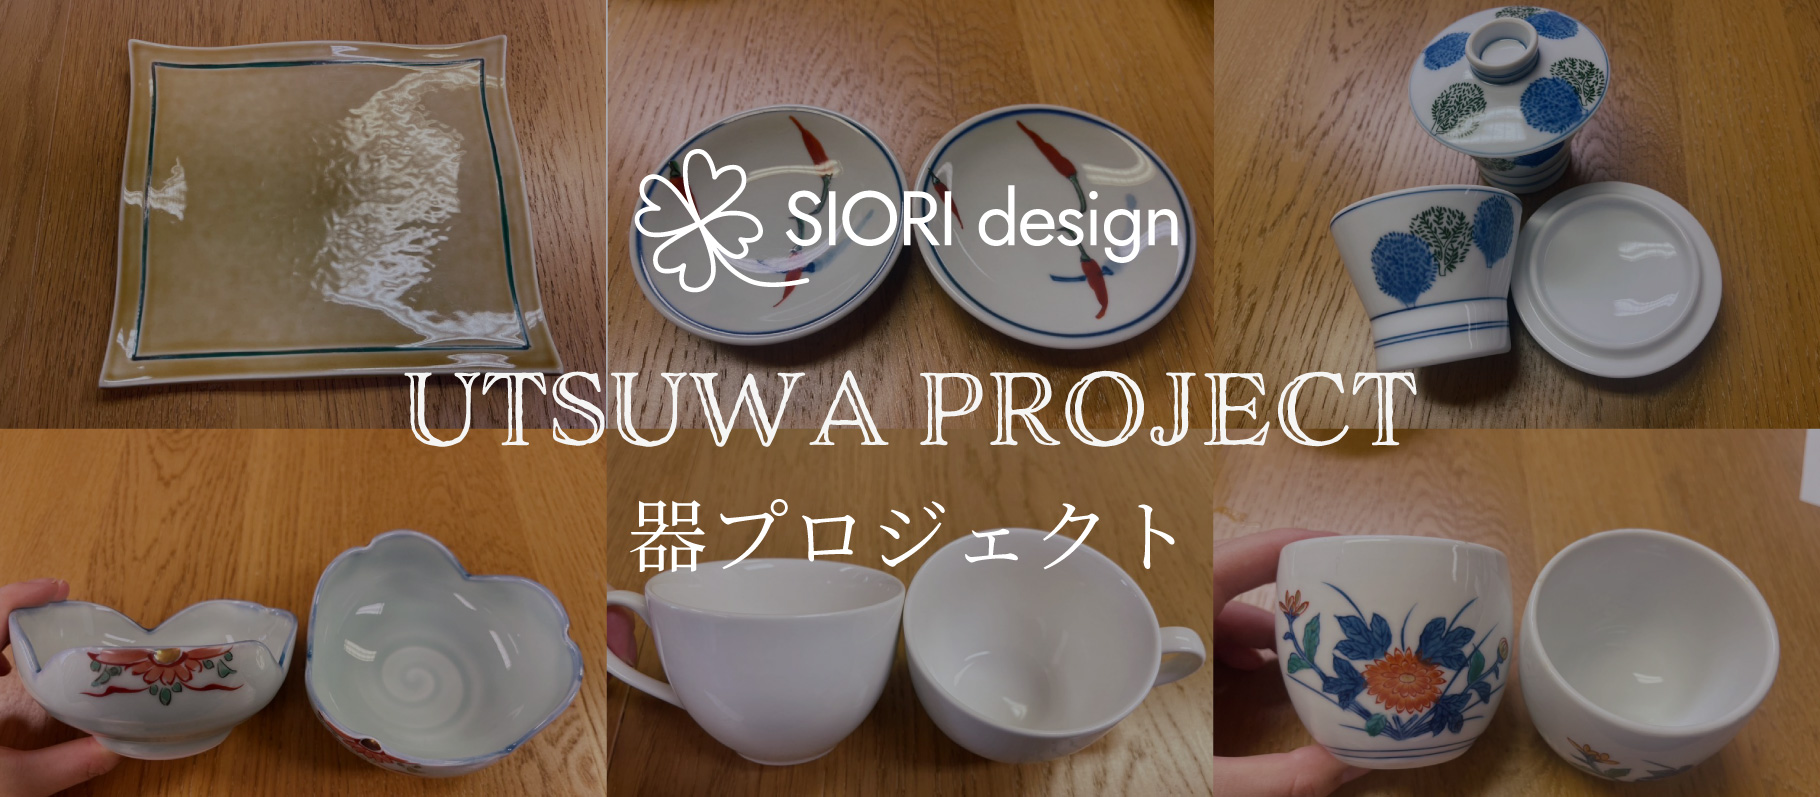 utsuwa project 001